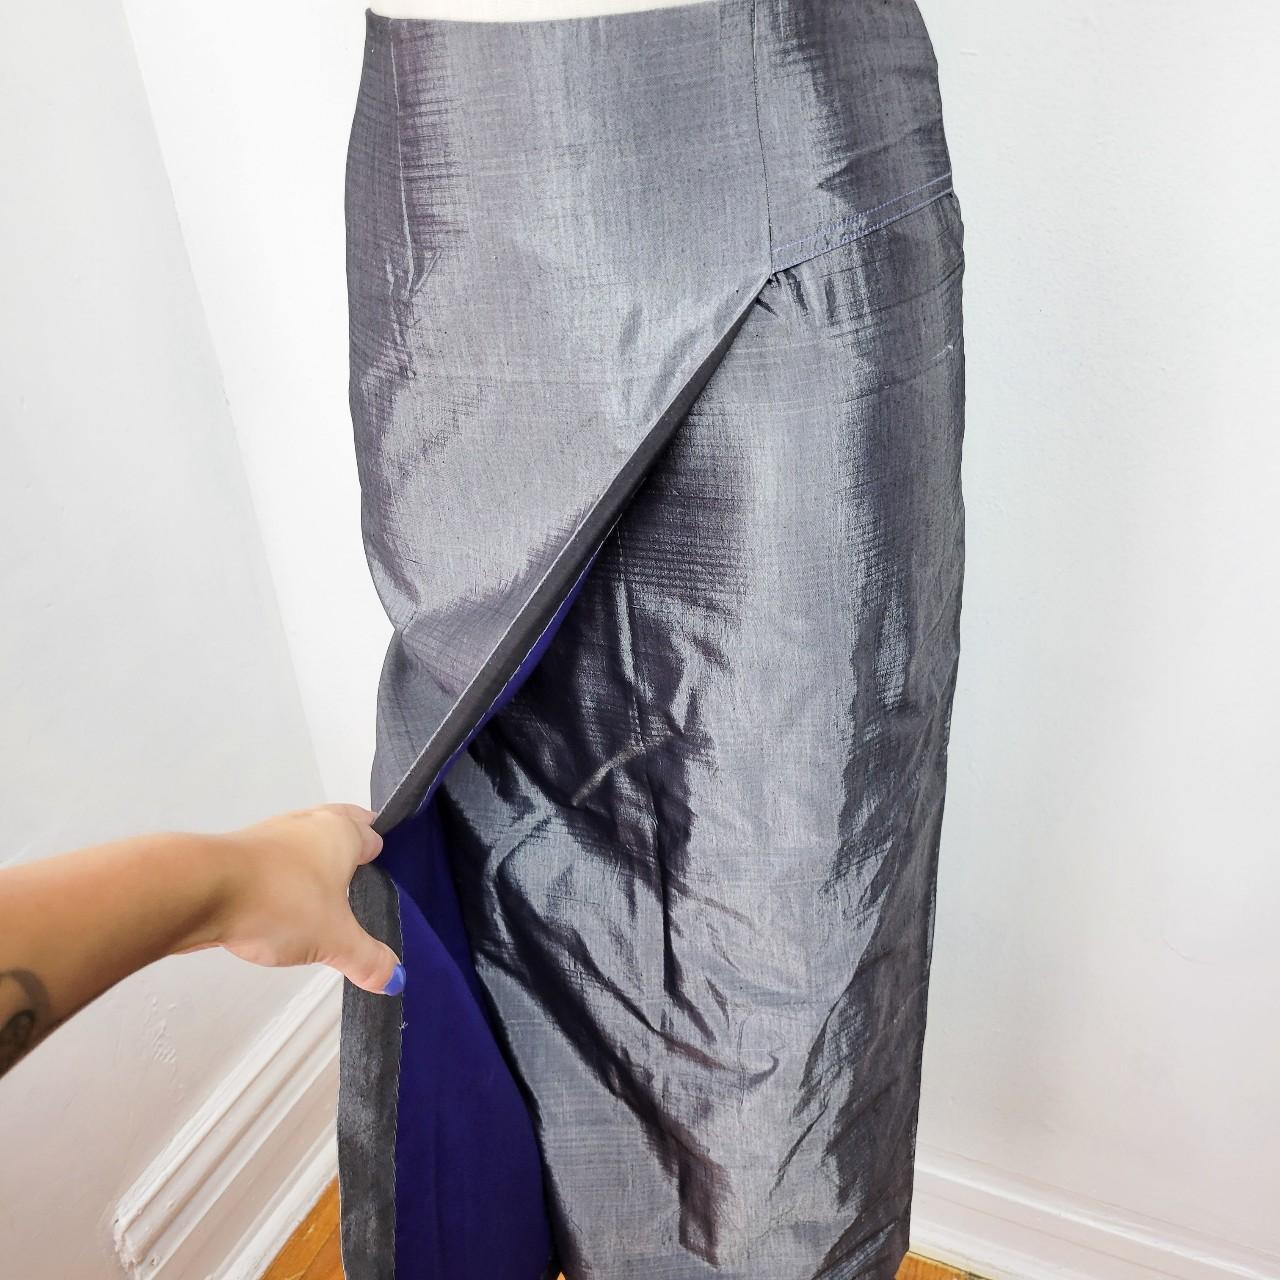 Product Image 2 - Handmade silver maxi skirt 🖤

Vintage